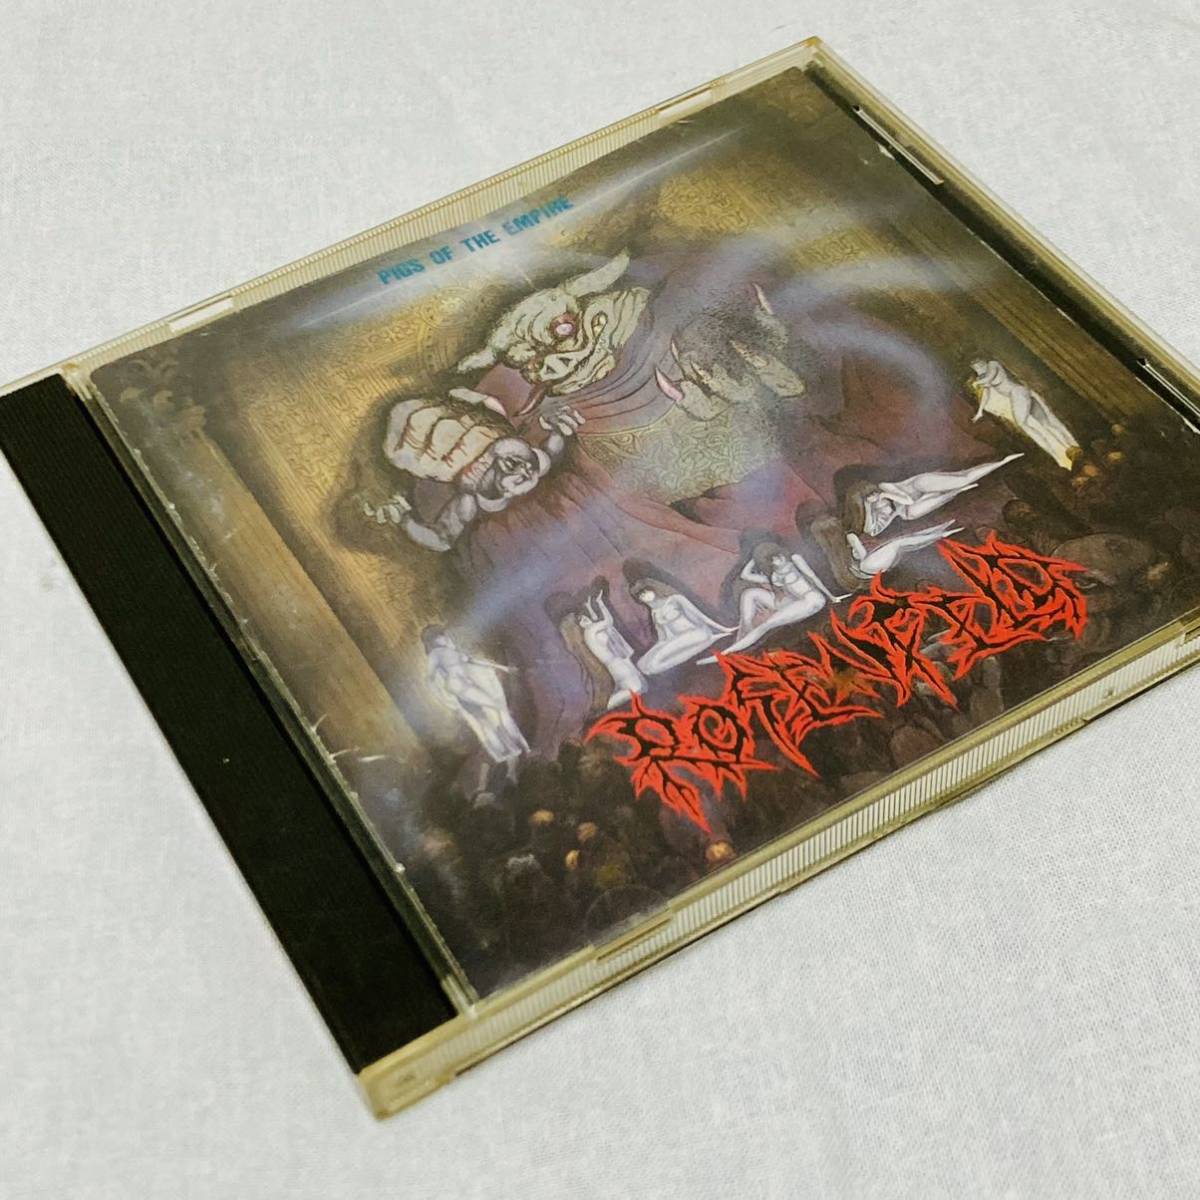 ROSENFELD Pigs Of The Empire トイズファクトリー リマスター盤